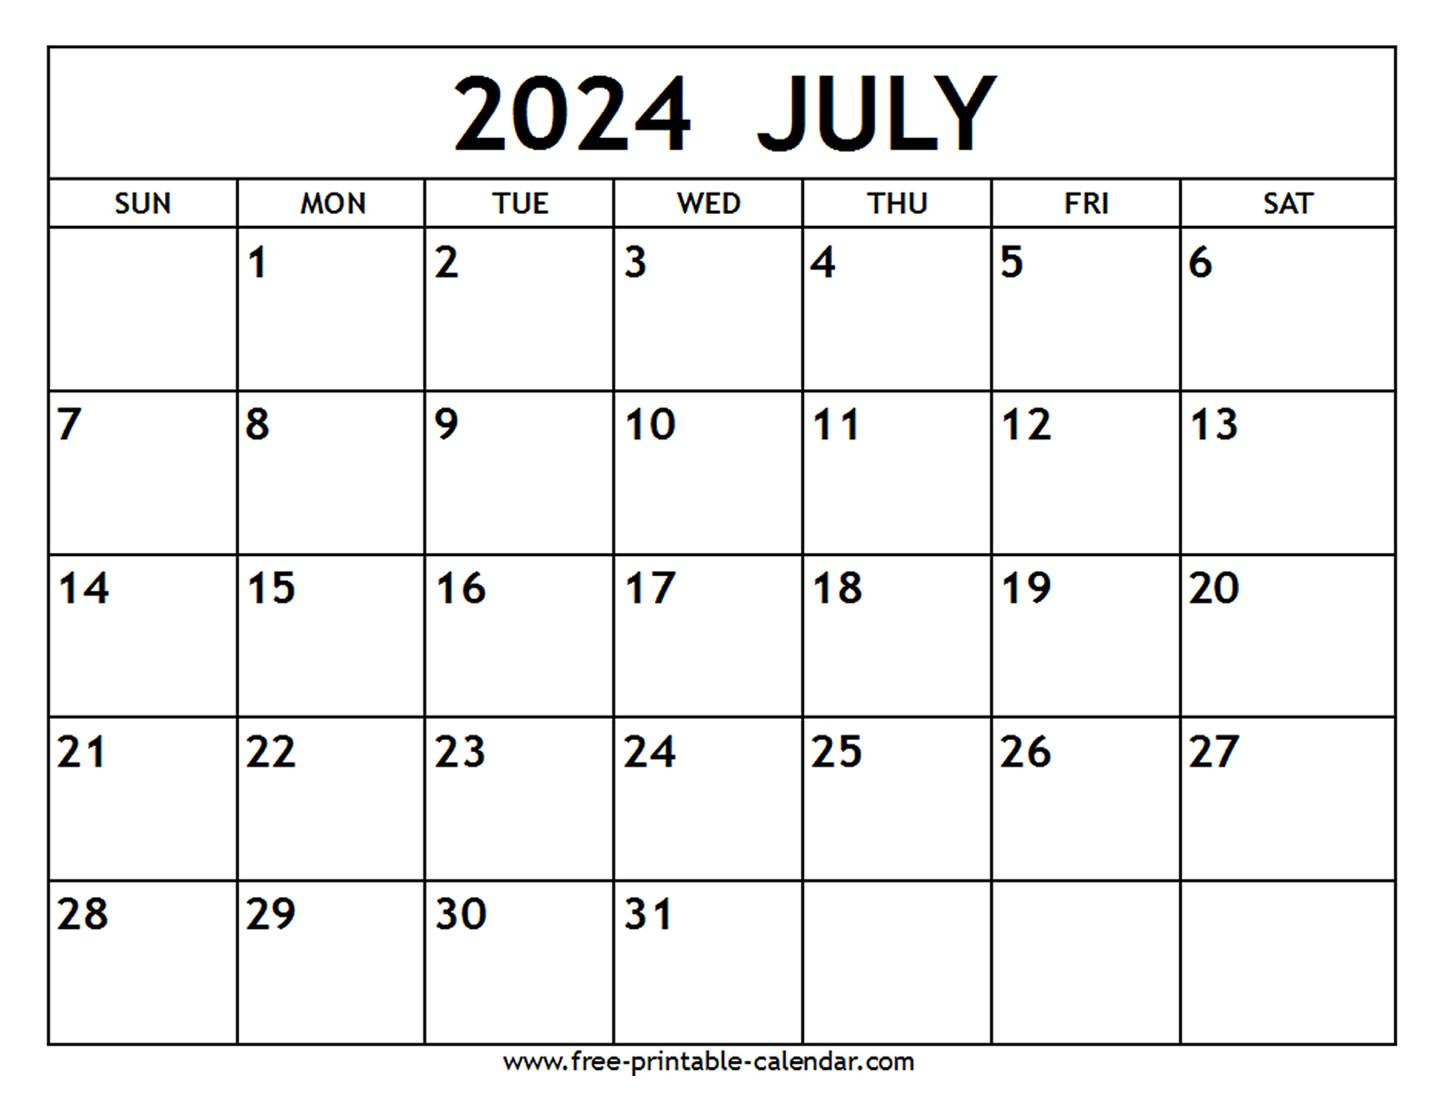 July 2024 Calendar - Free-Printable-Calendar | 18 July 2024 Calendar Printable